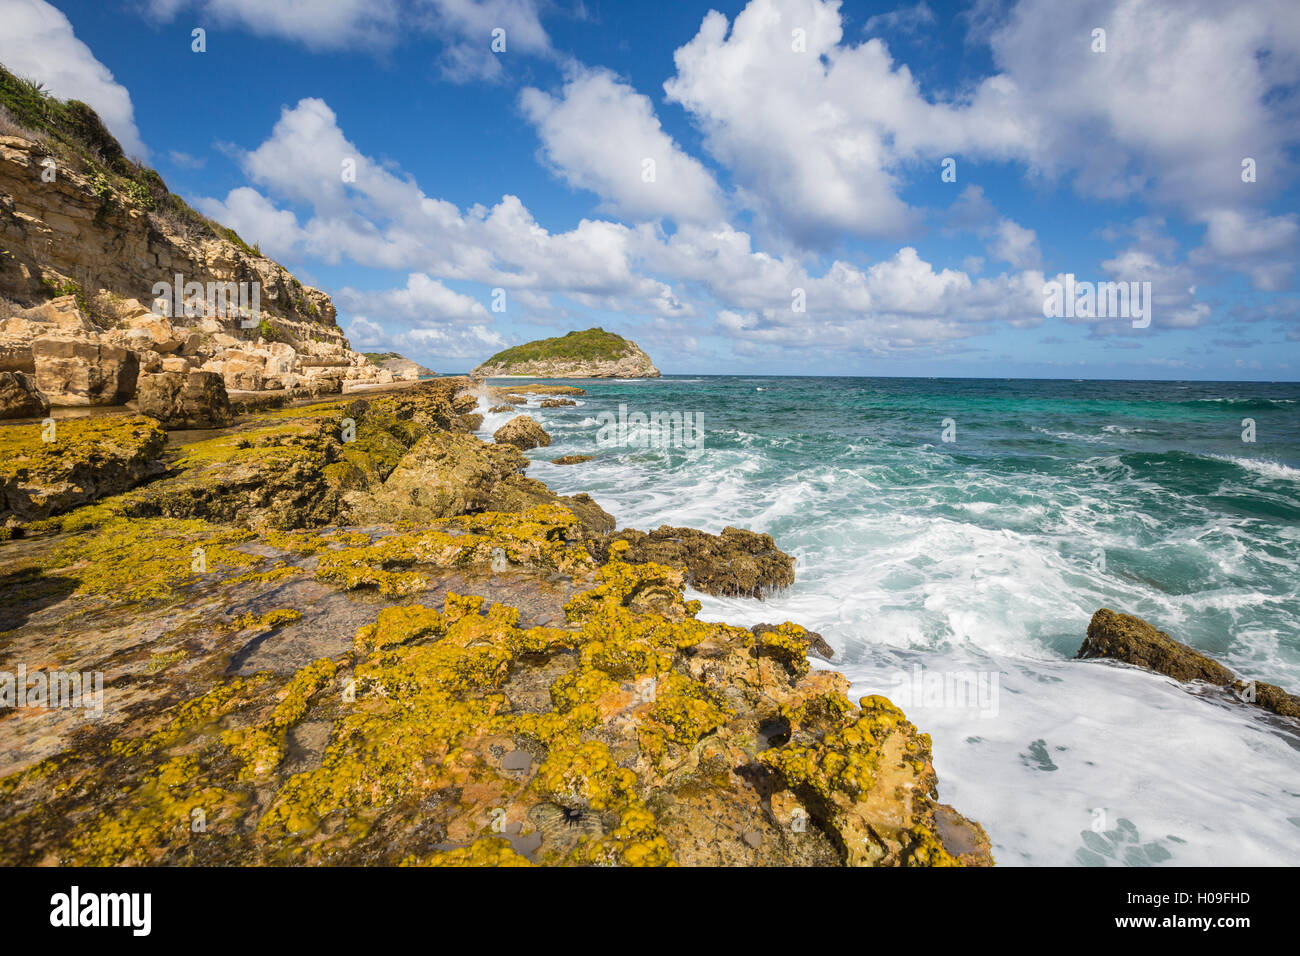 The waves of the Caribbean Sea crashing on the cliffs, Half Moon Bay, Antigua and Barbuda, Leeward Islands, West Indies Stock Photo